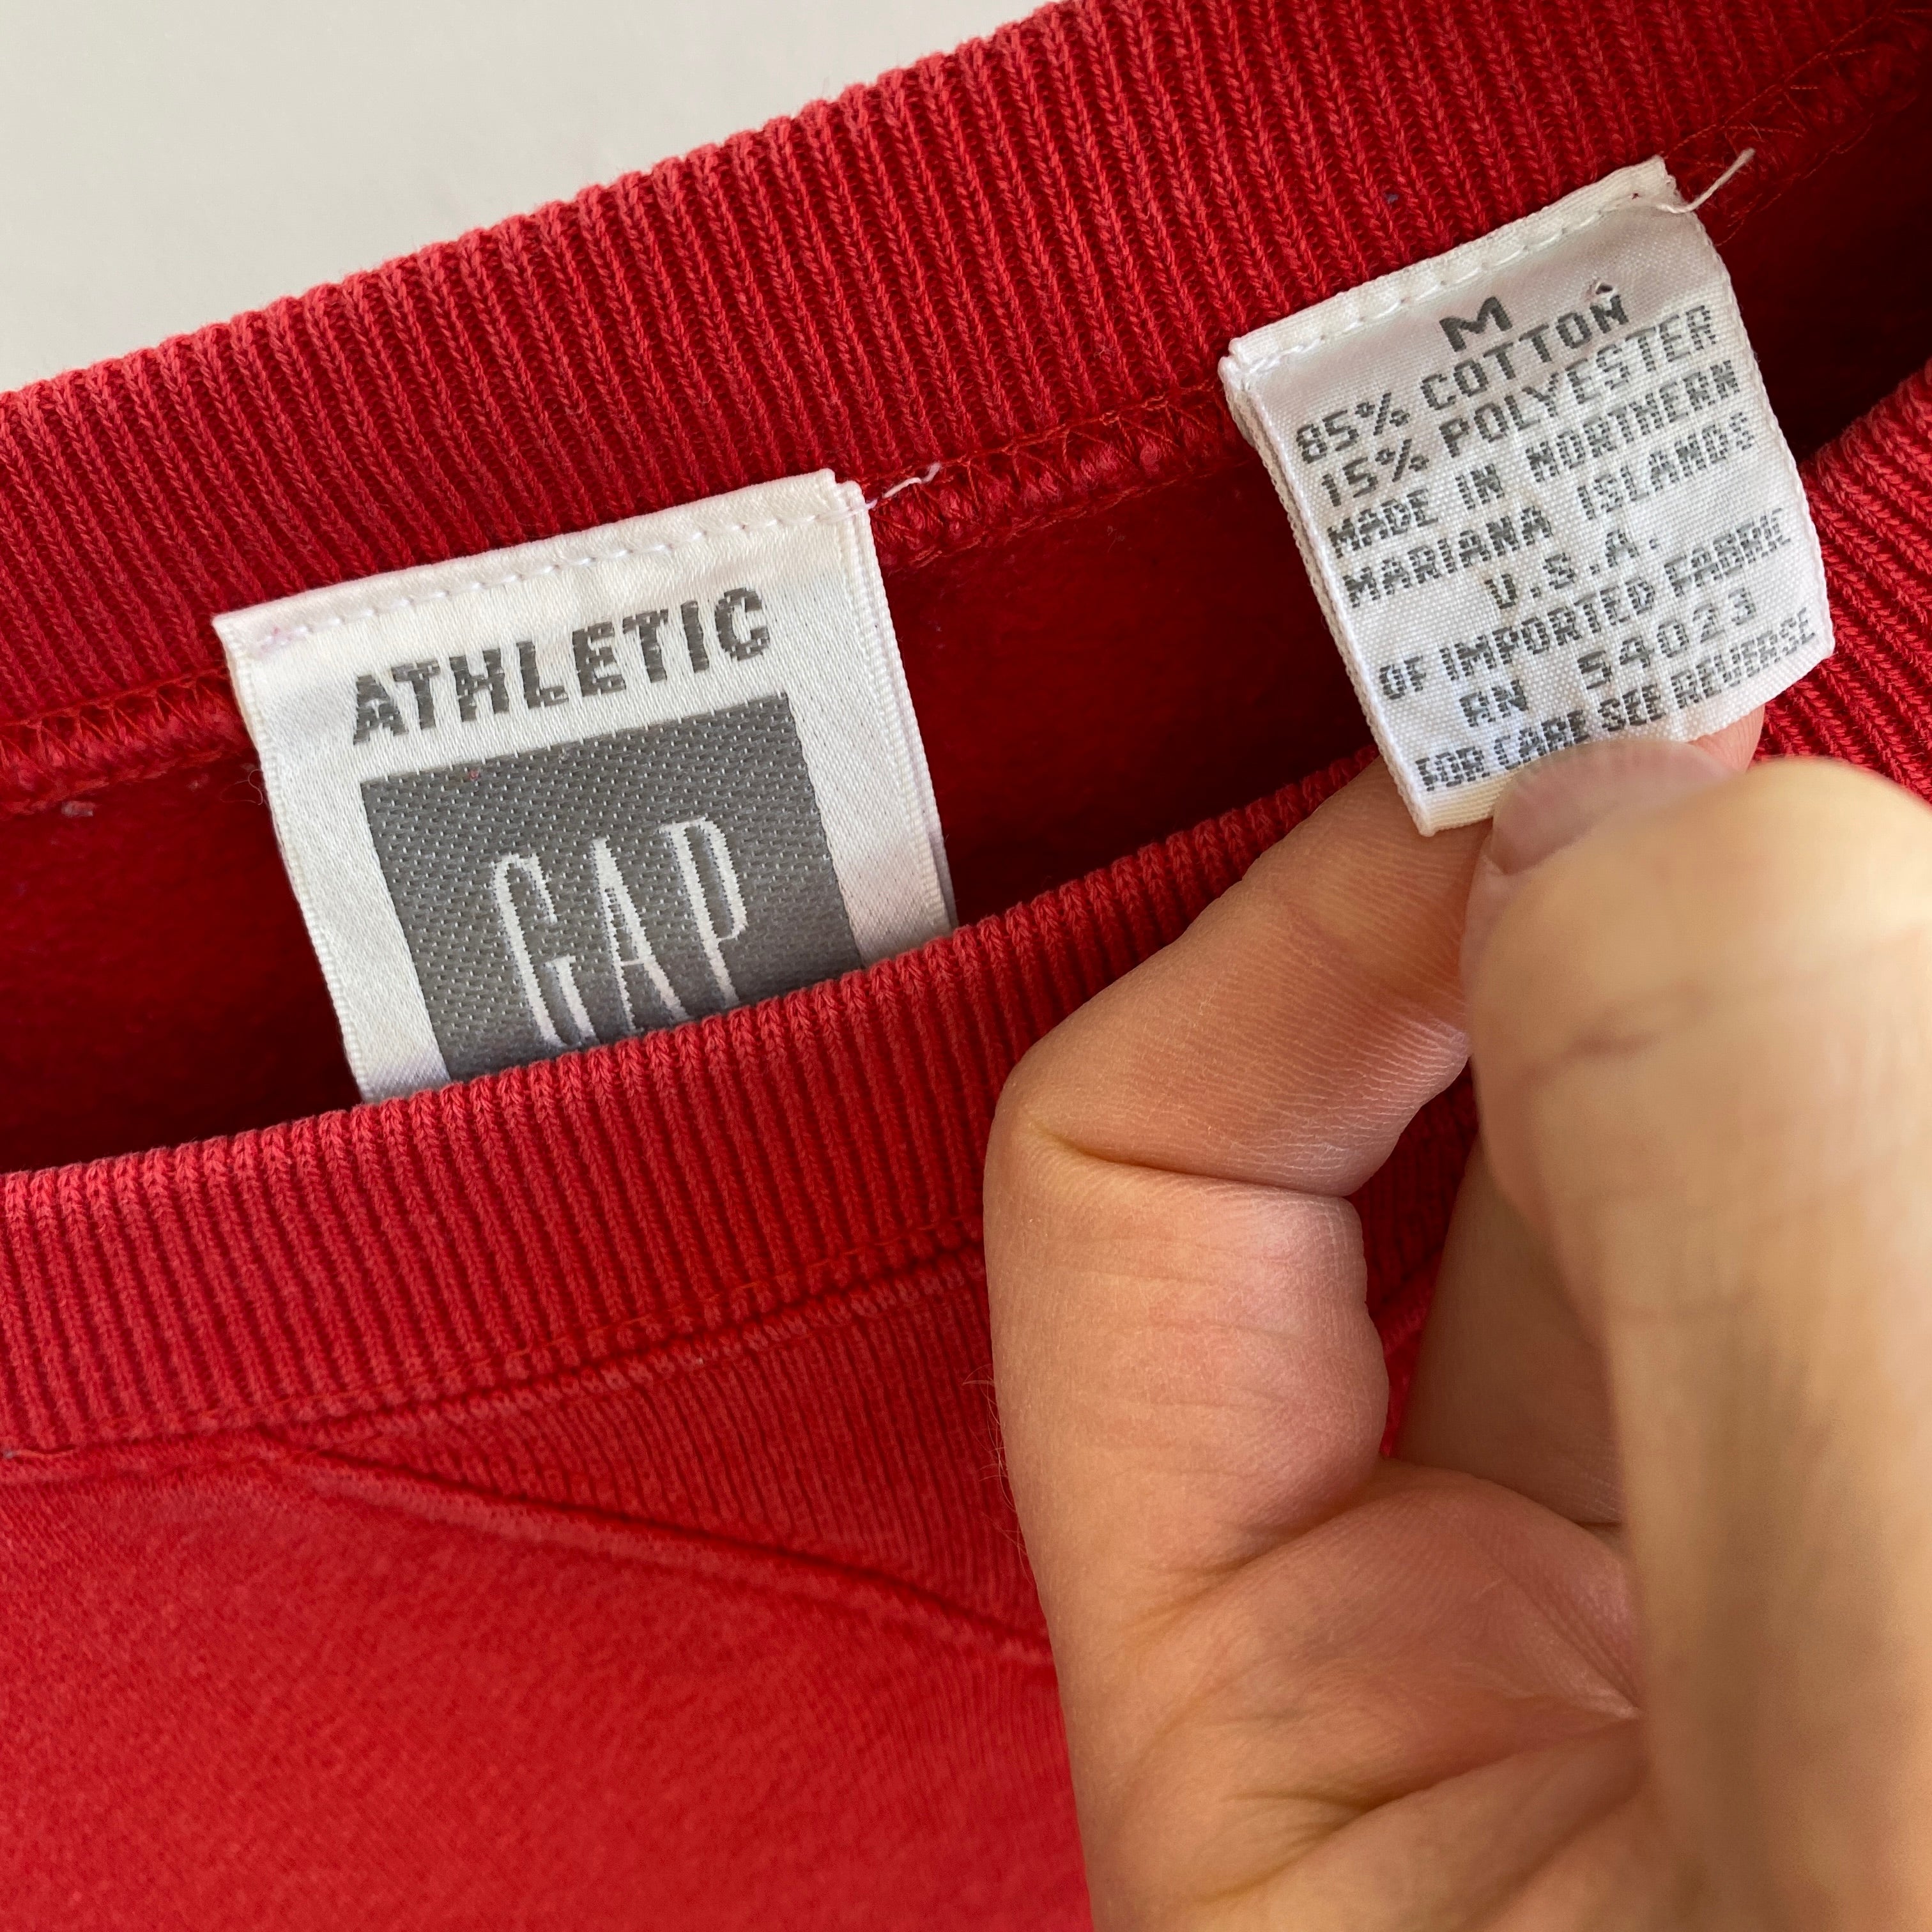 1990s Blank Red USA Made Gap Sweat-shirt avec une seule tache de javel